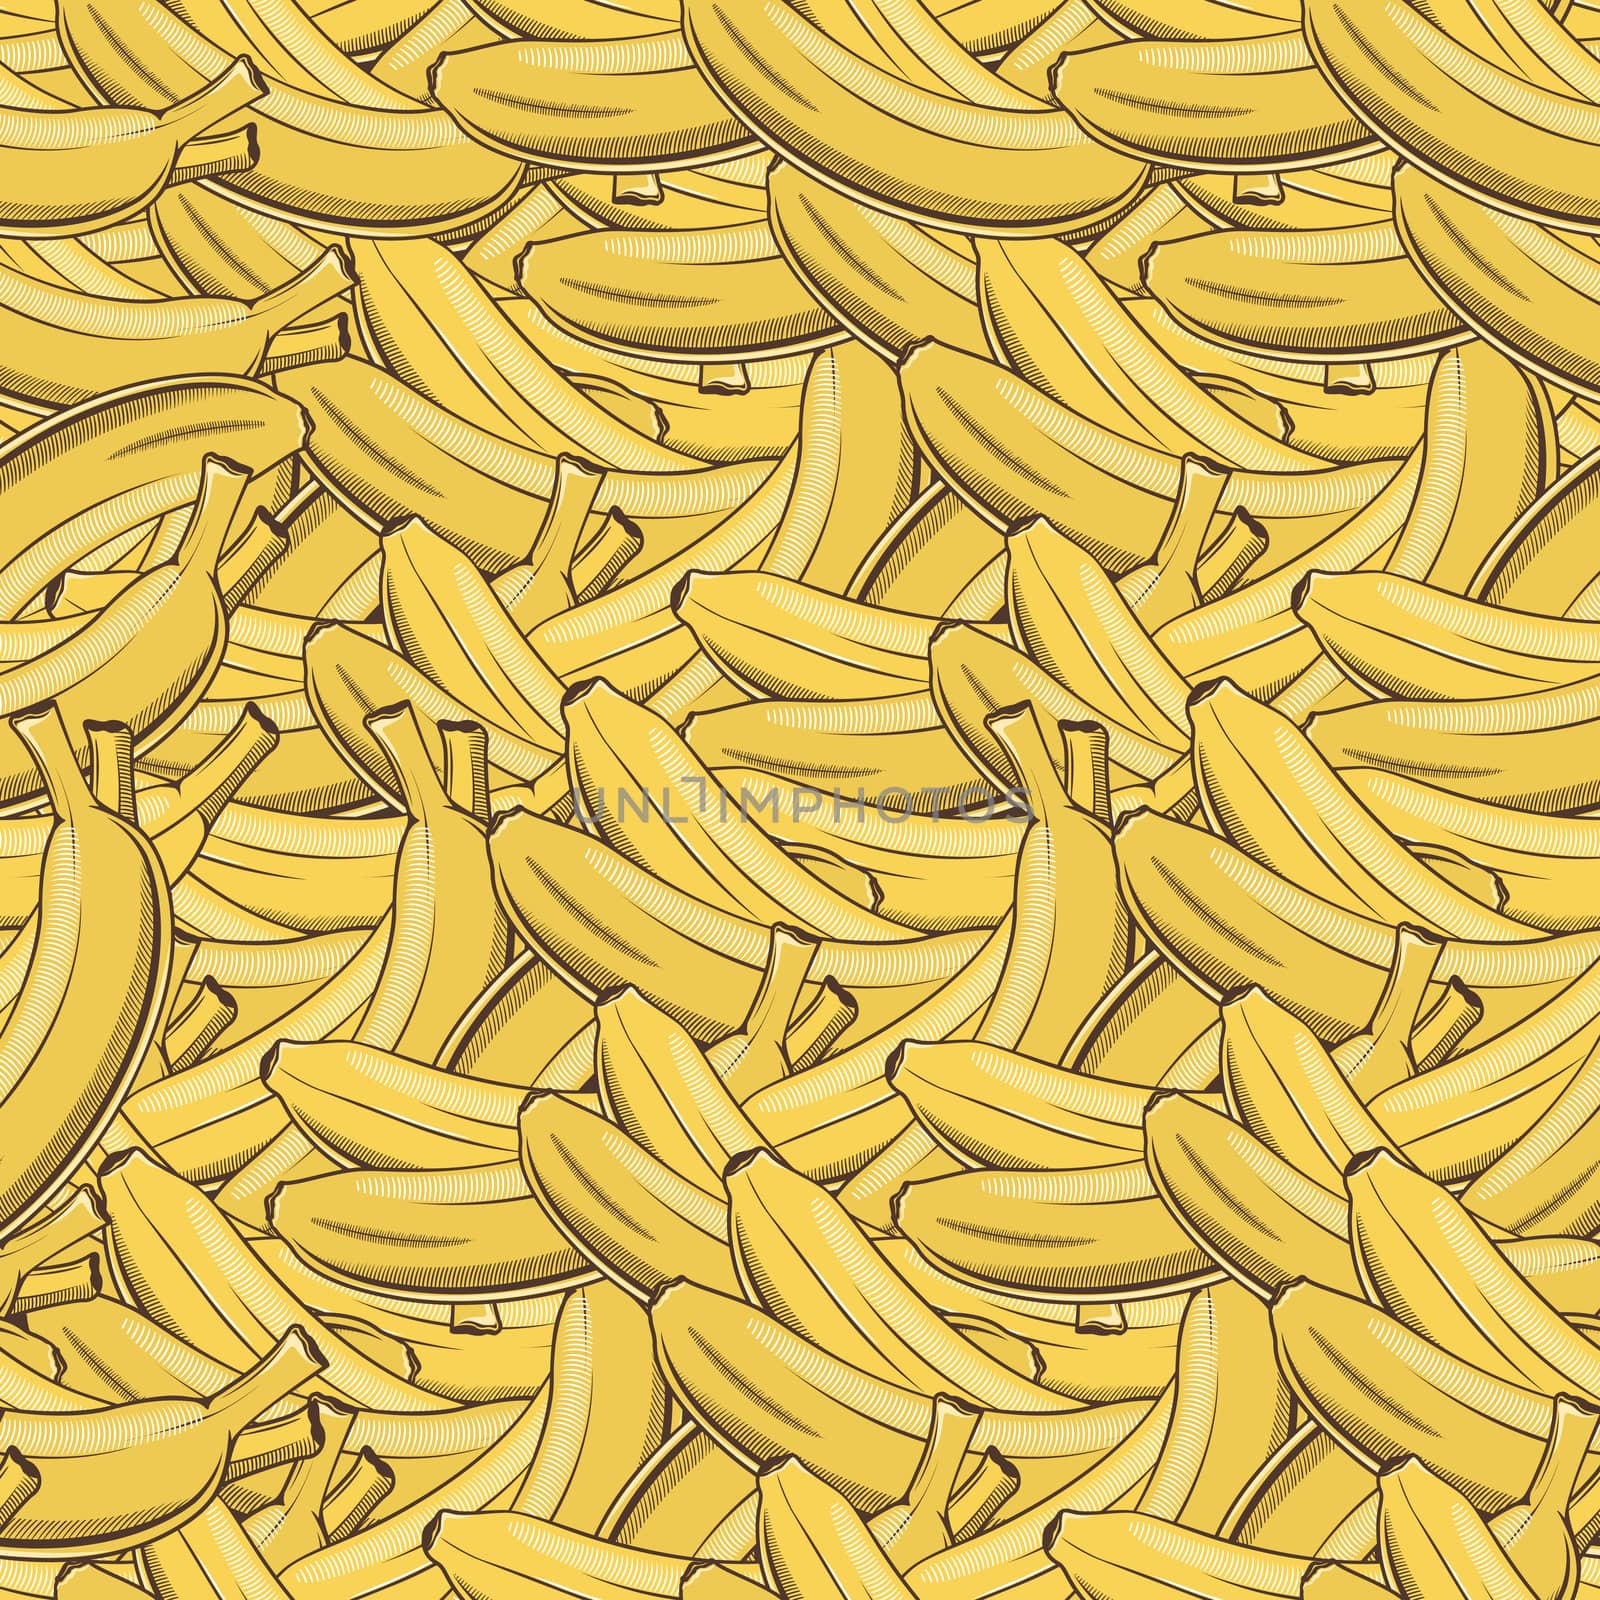 Vintage Banana Seamless Pattern by ConceptCafe